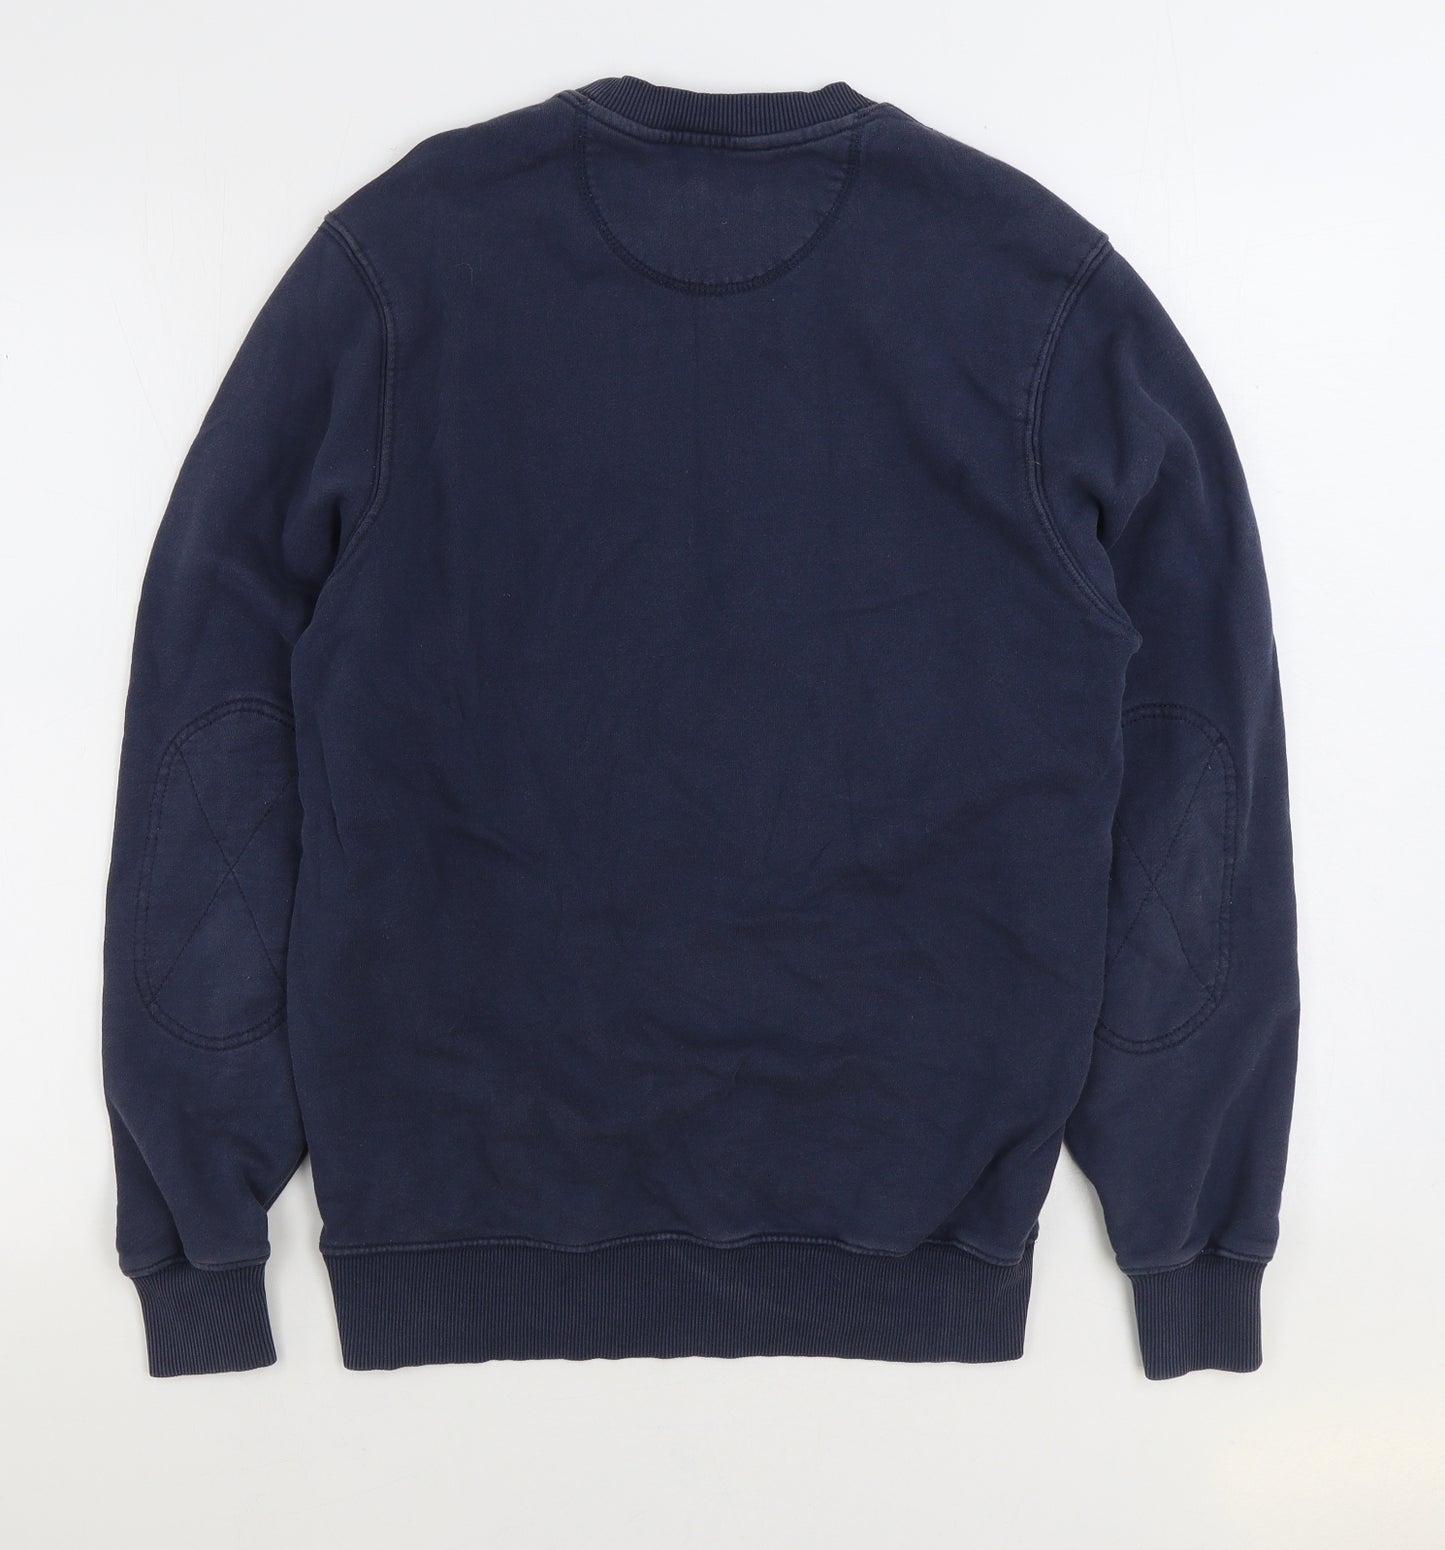 Farah Mens Blue Cotton Pullover Sweatshirt Size S